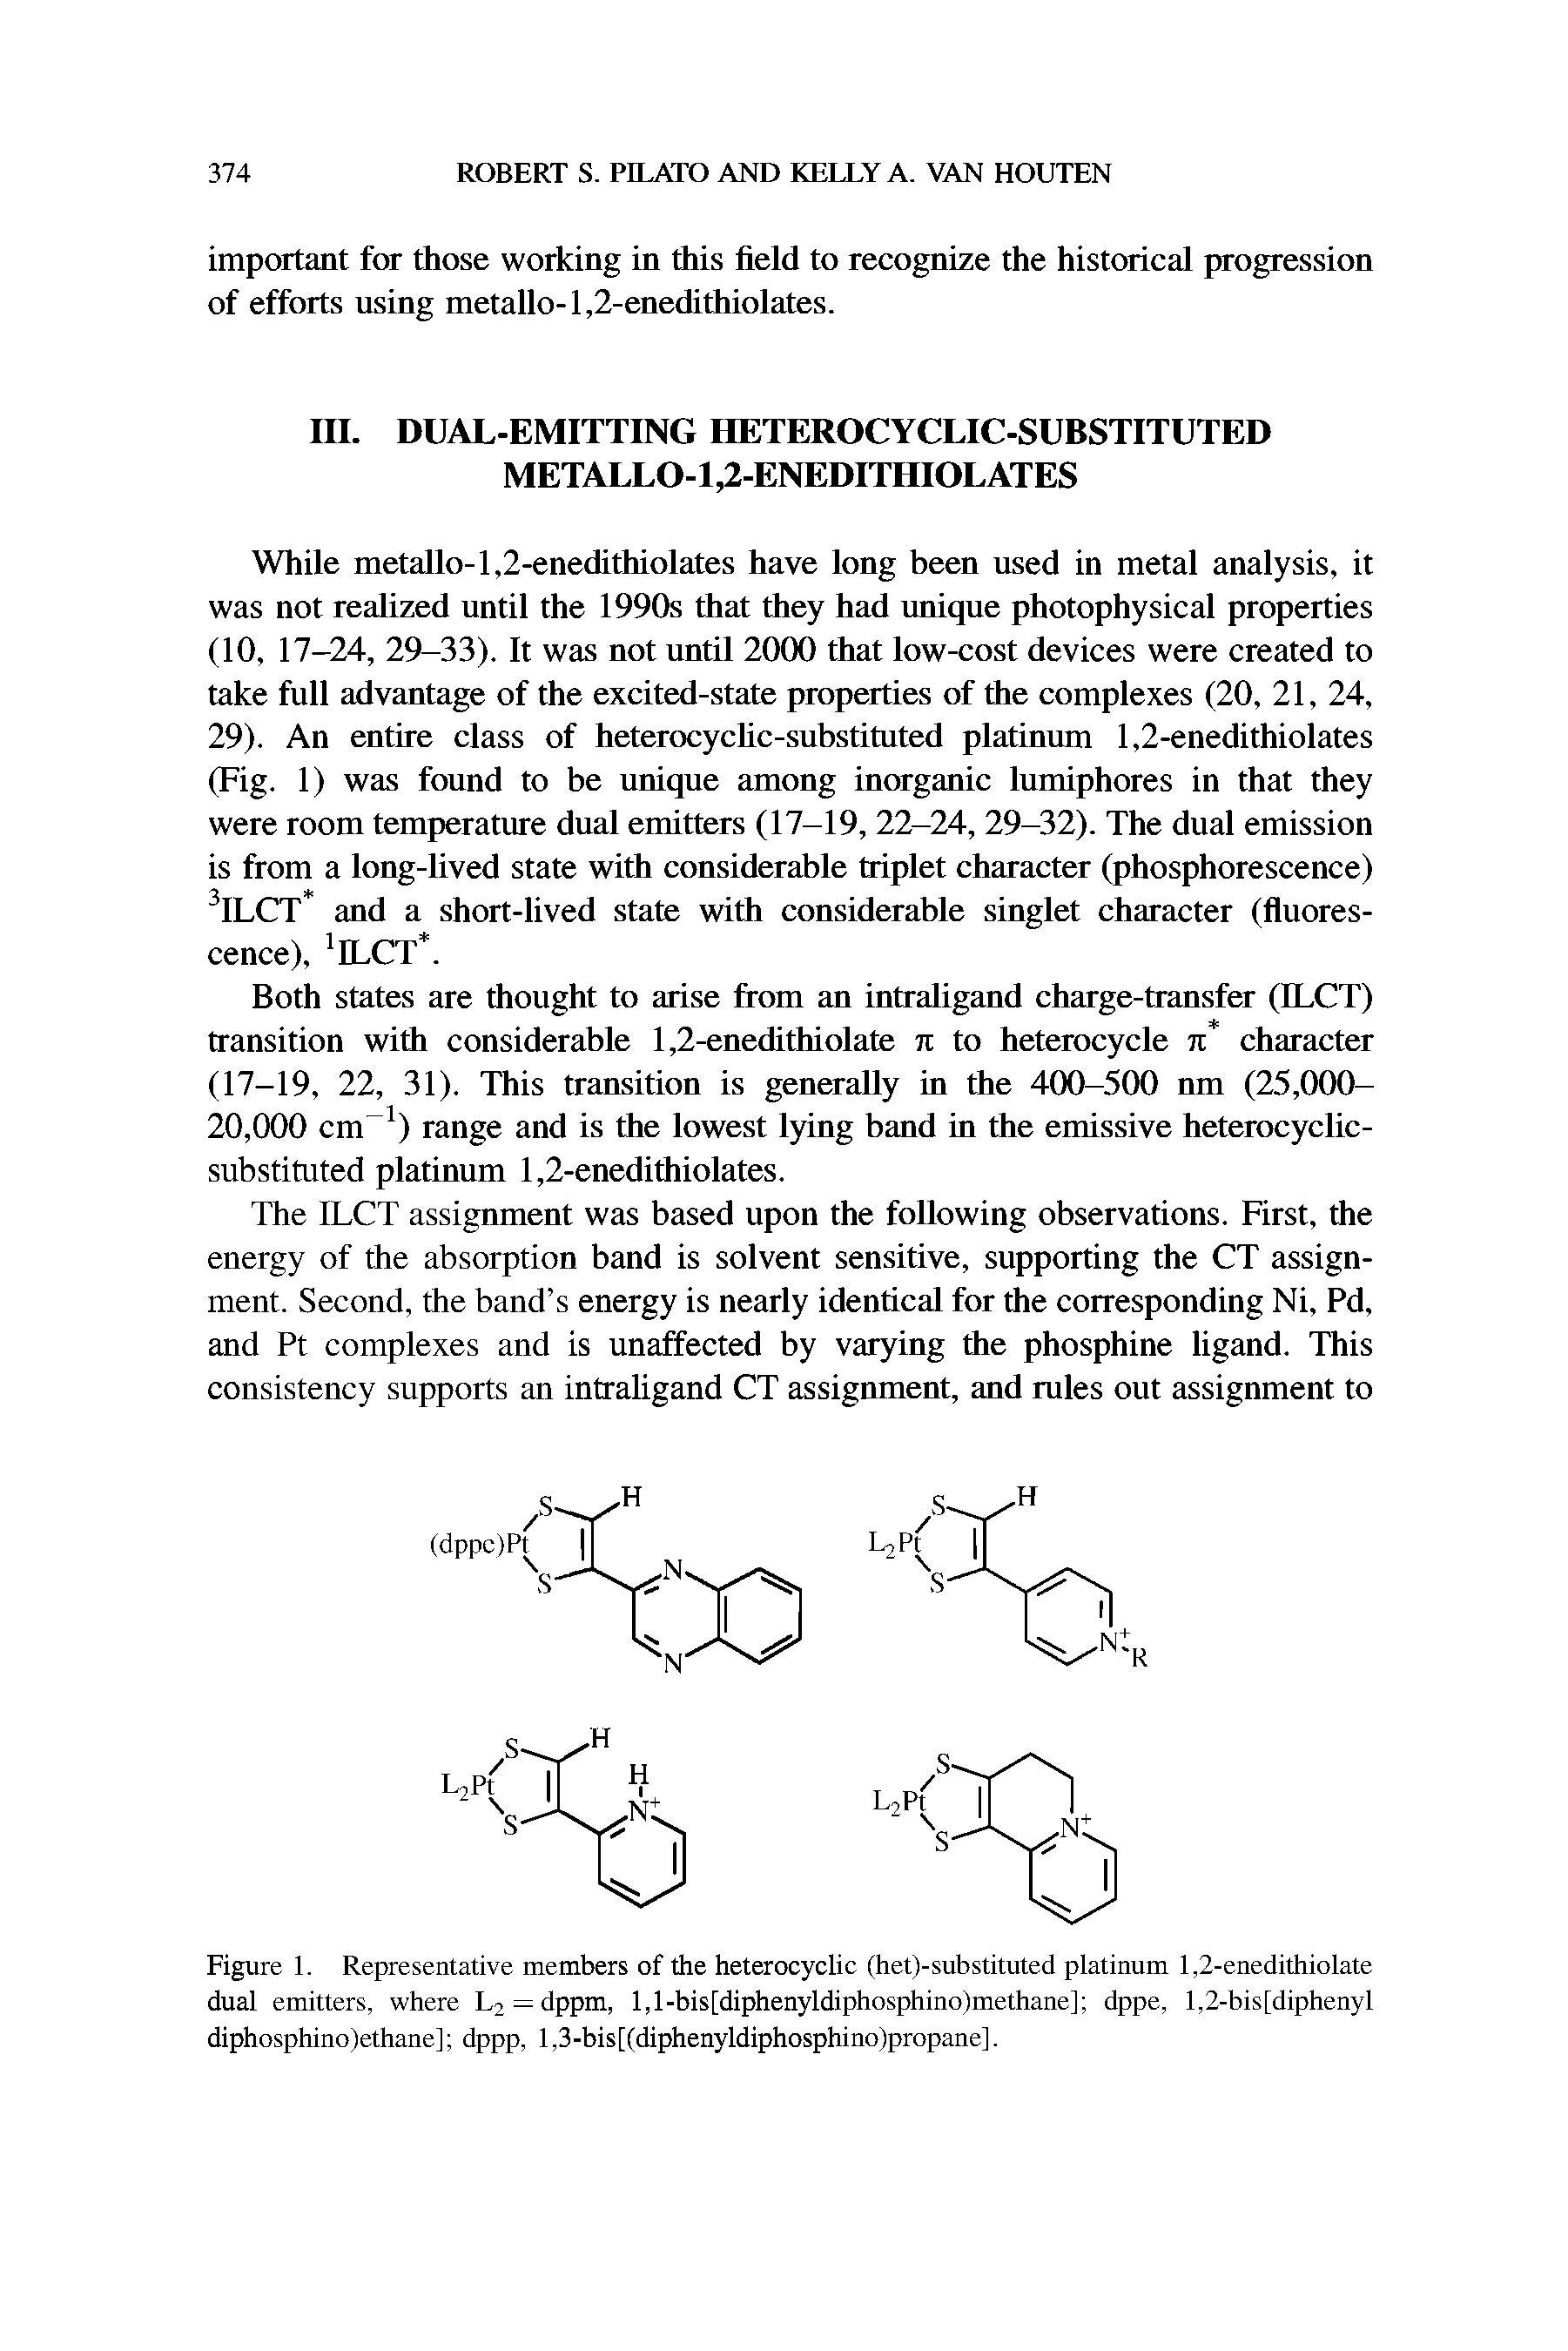 Figure 1. Representative members of the heterocyclic (het)-substituted platinum 1,2-enedithiolate dual emitters, where L2 = dppm, l,l-bis[diphenyldiphosphino)methane] dppe, l,2-bis[diphenyl diphosphino)ethane] dppp, 1,3-bis[(diphenyldiphosphino)propane].